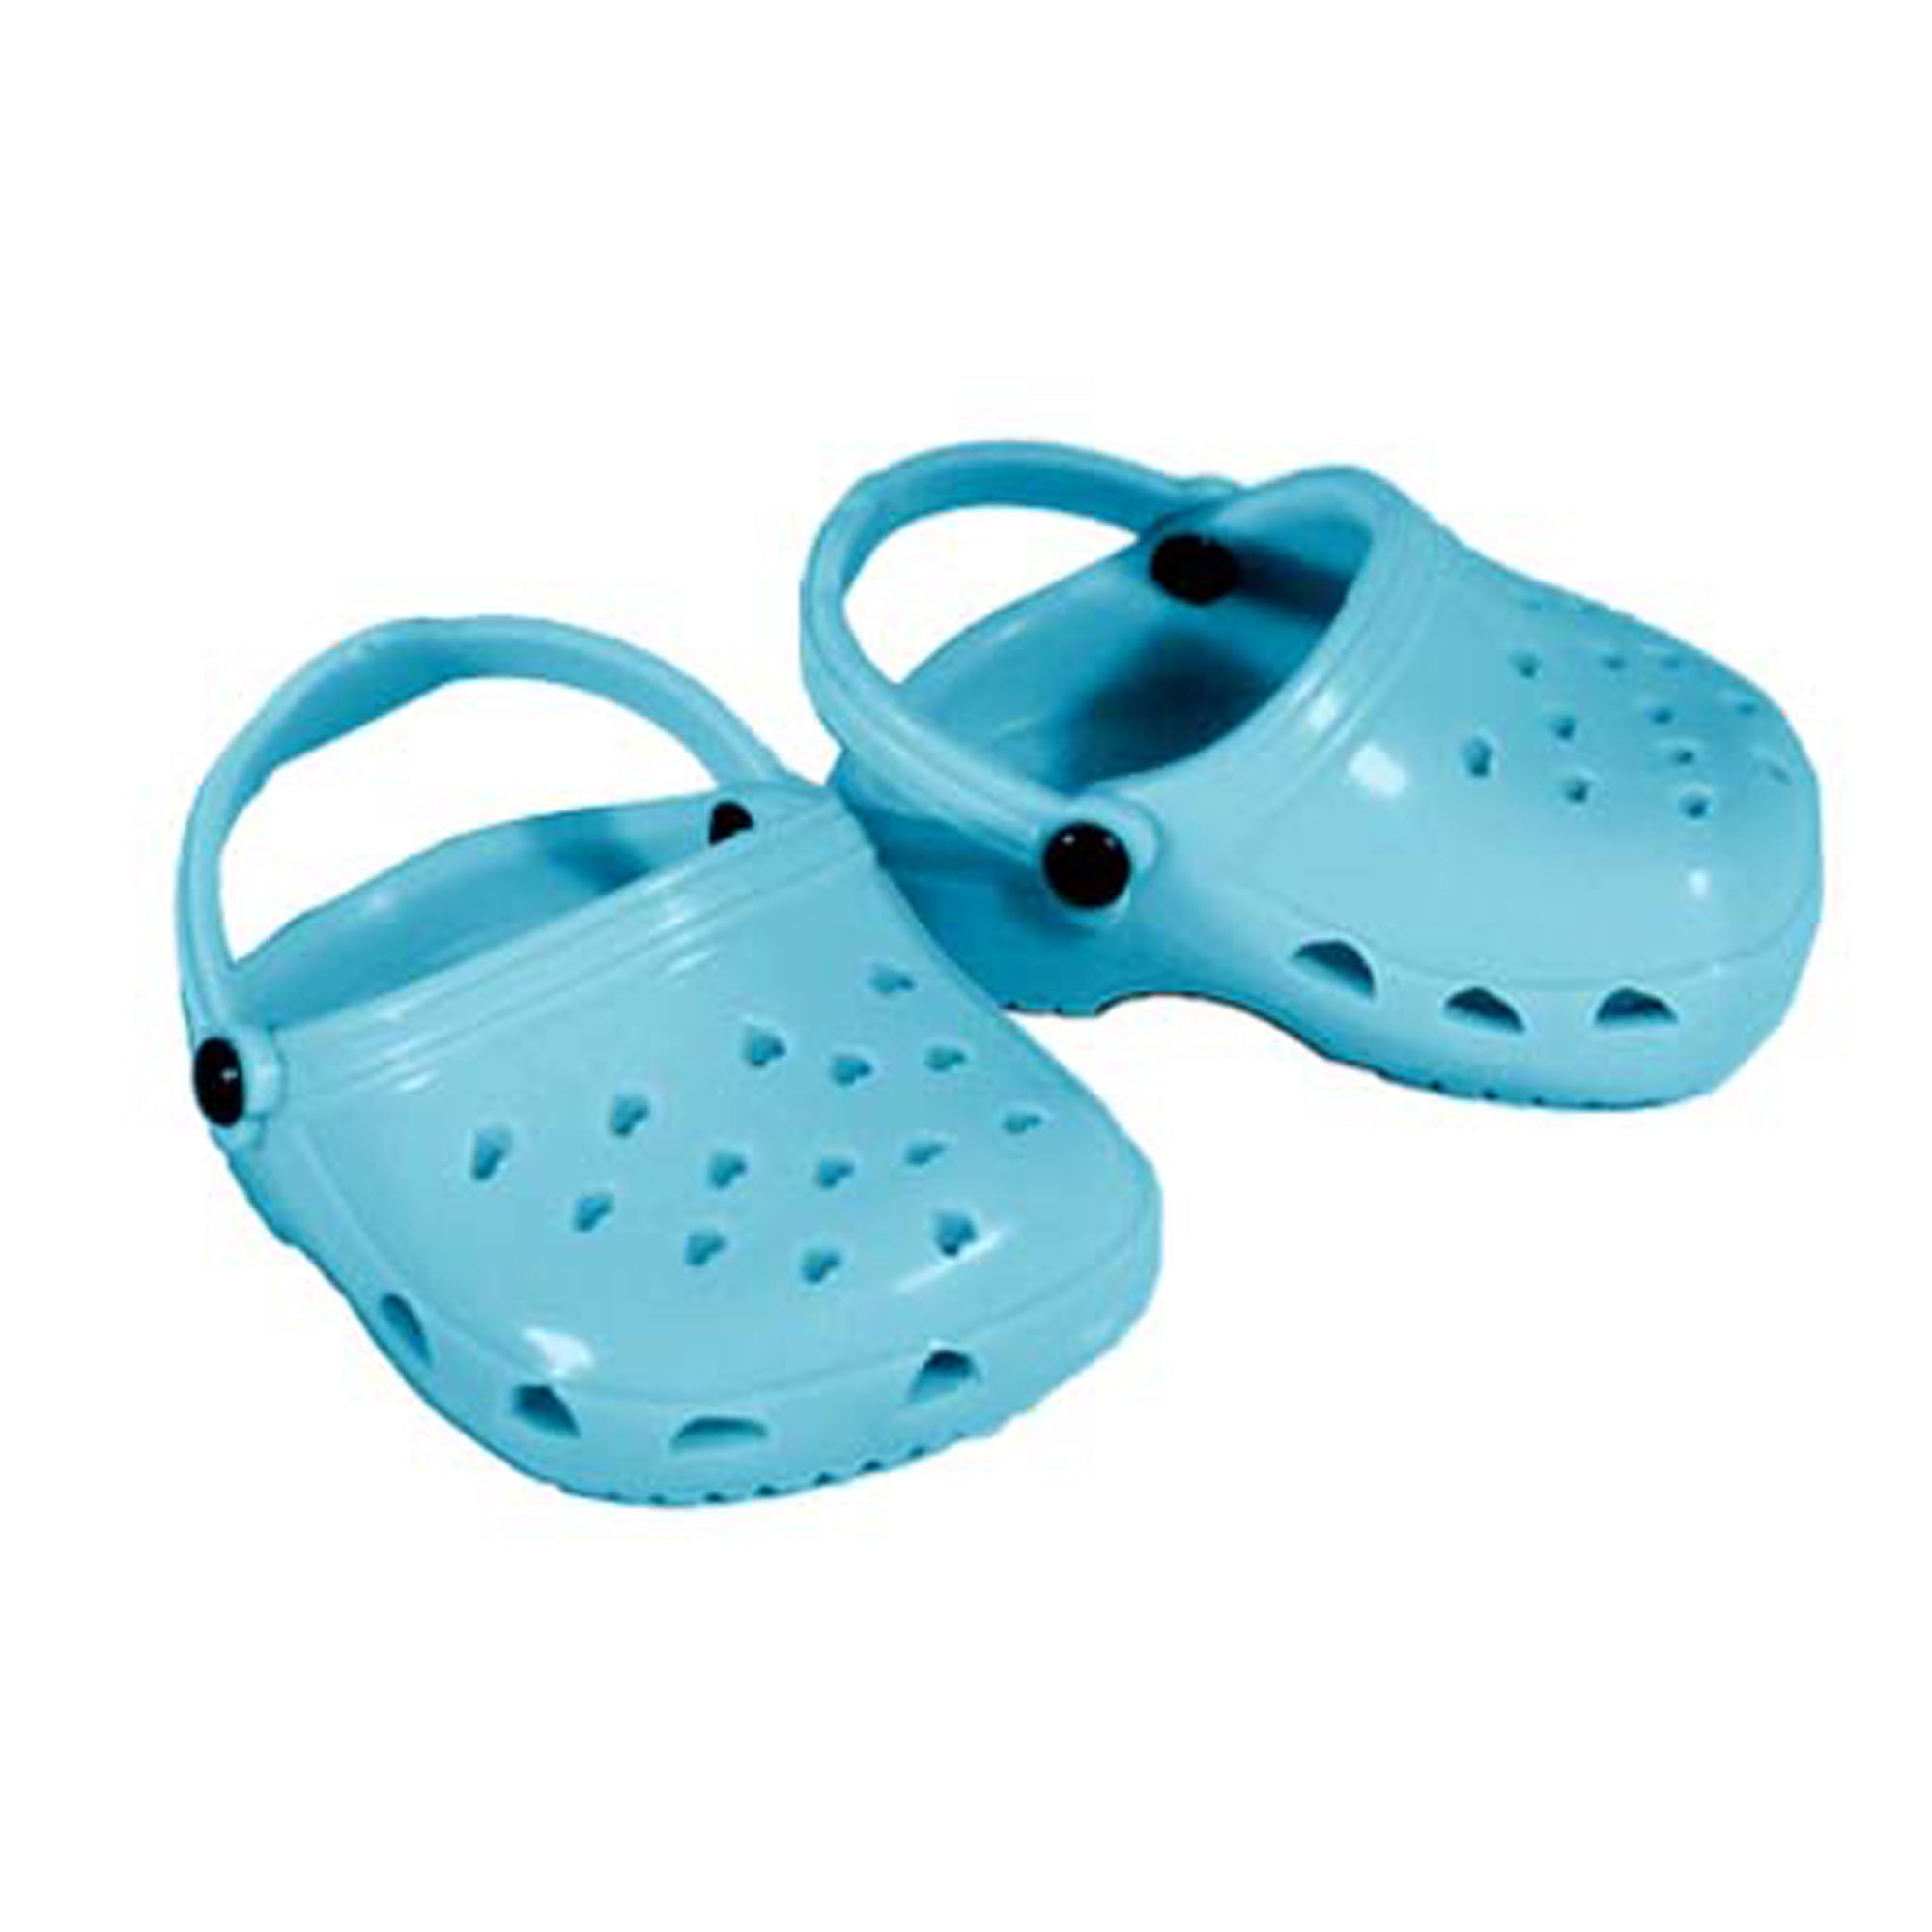 Sophias Clog Sandal Shoes Accessory for 18" Dolls, Aqua